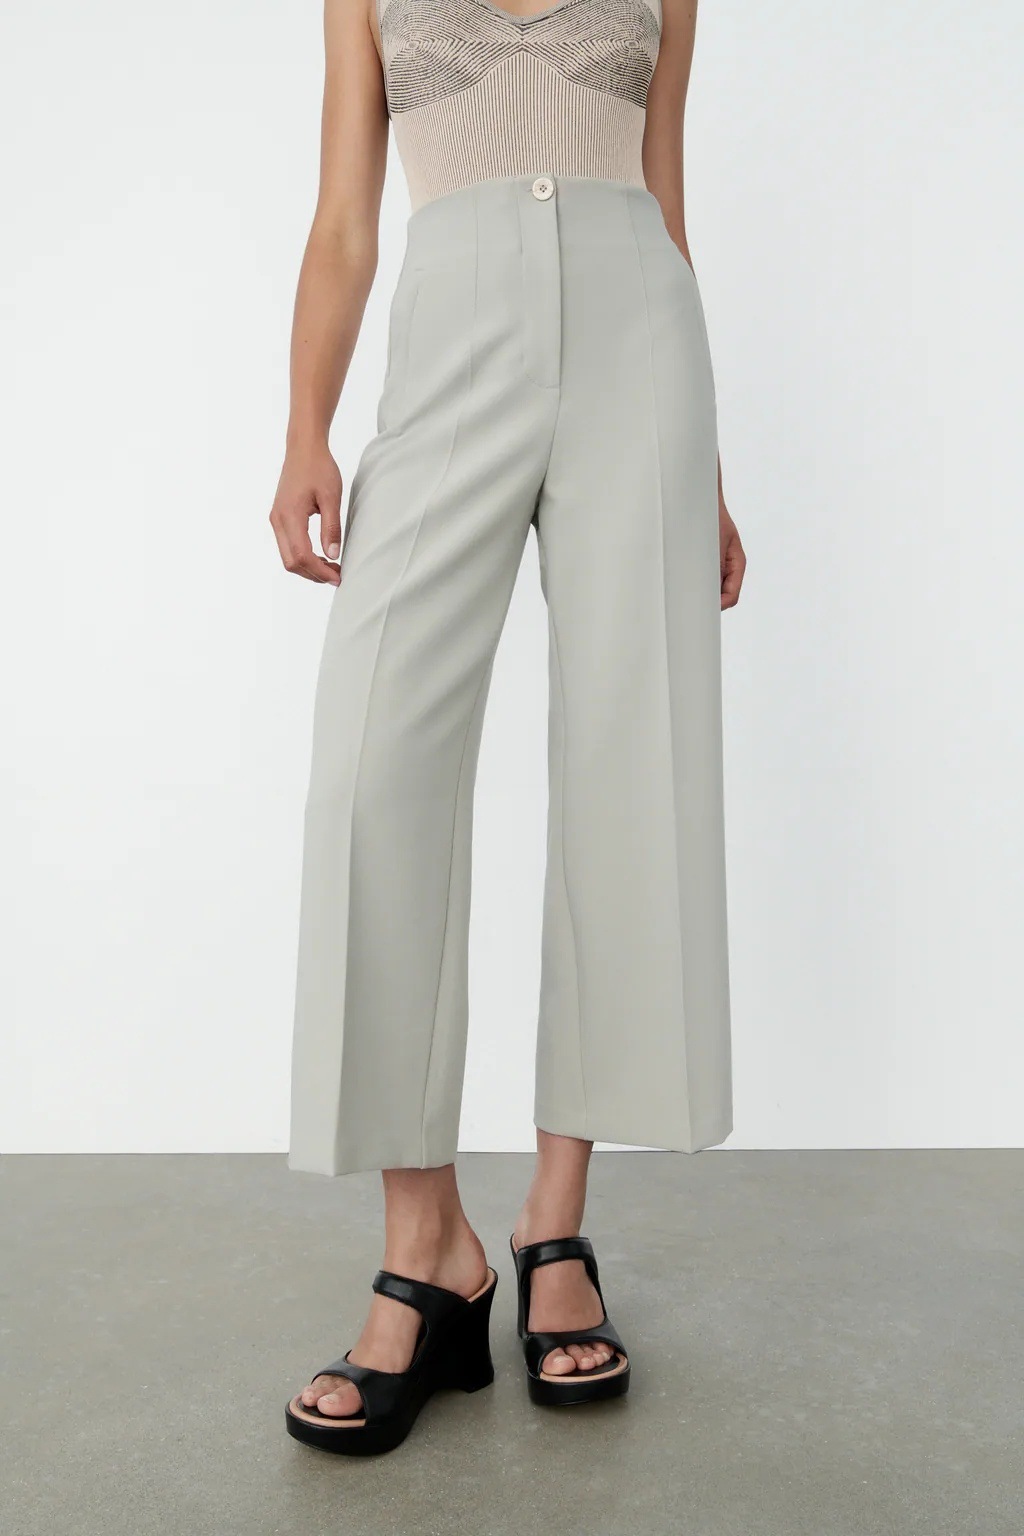 women s high-waist wide-leg  straight-leg pants nihaostyles clothing wholesale NSAM77816